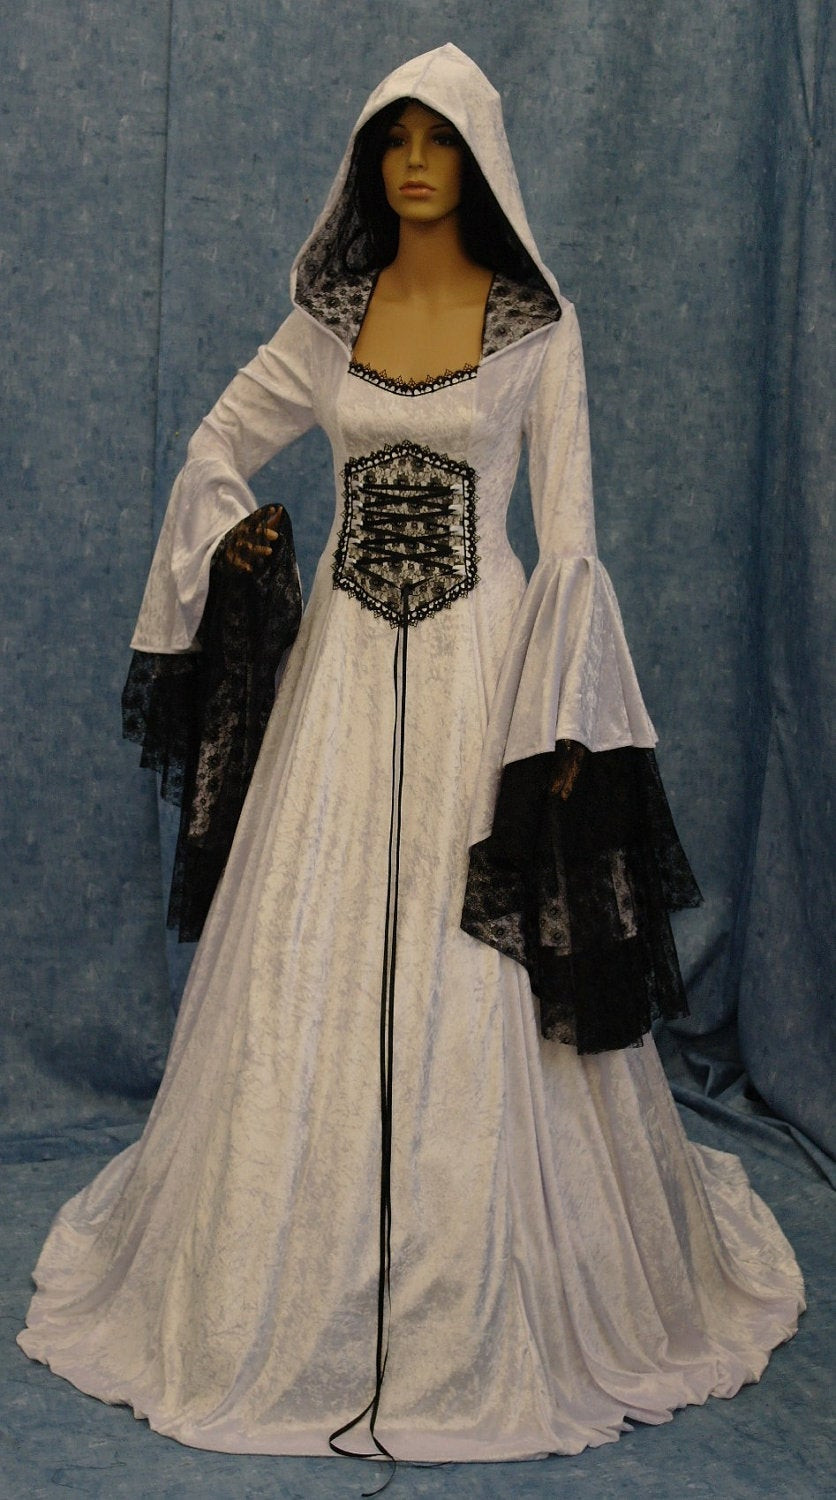 Medieval Wedding Dresses
 Renaissance wedding dress me val dress elven by